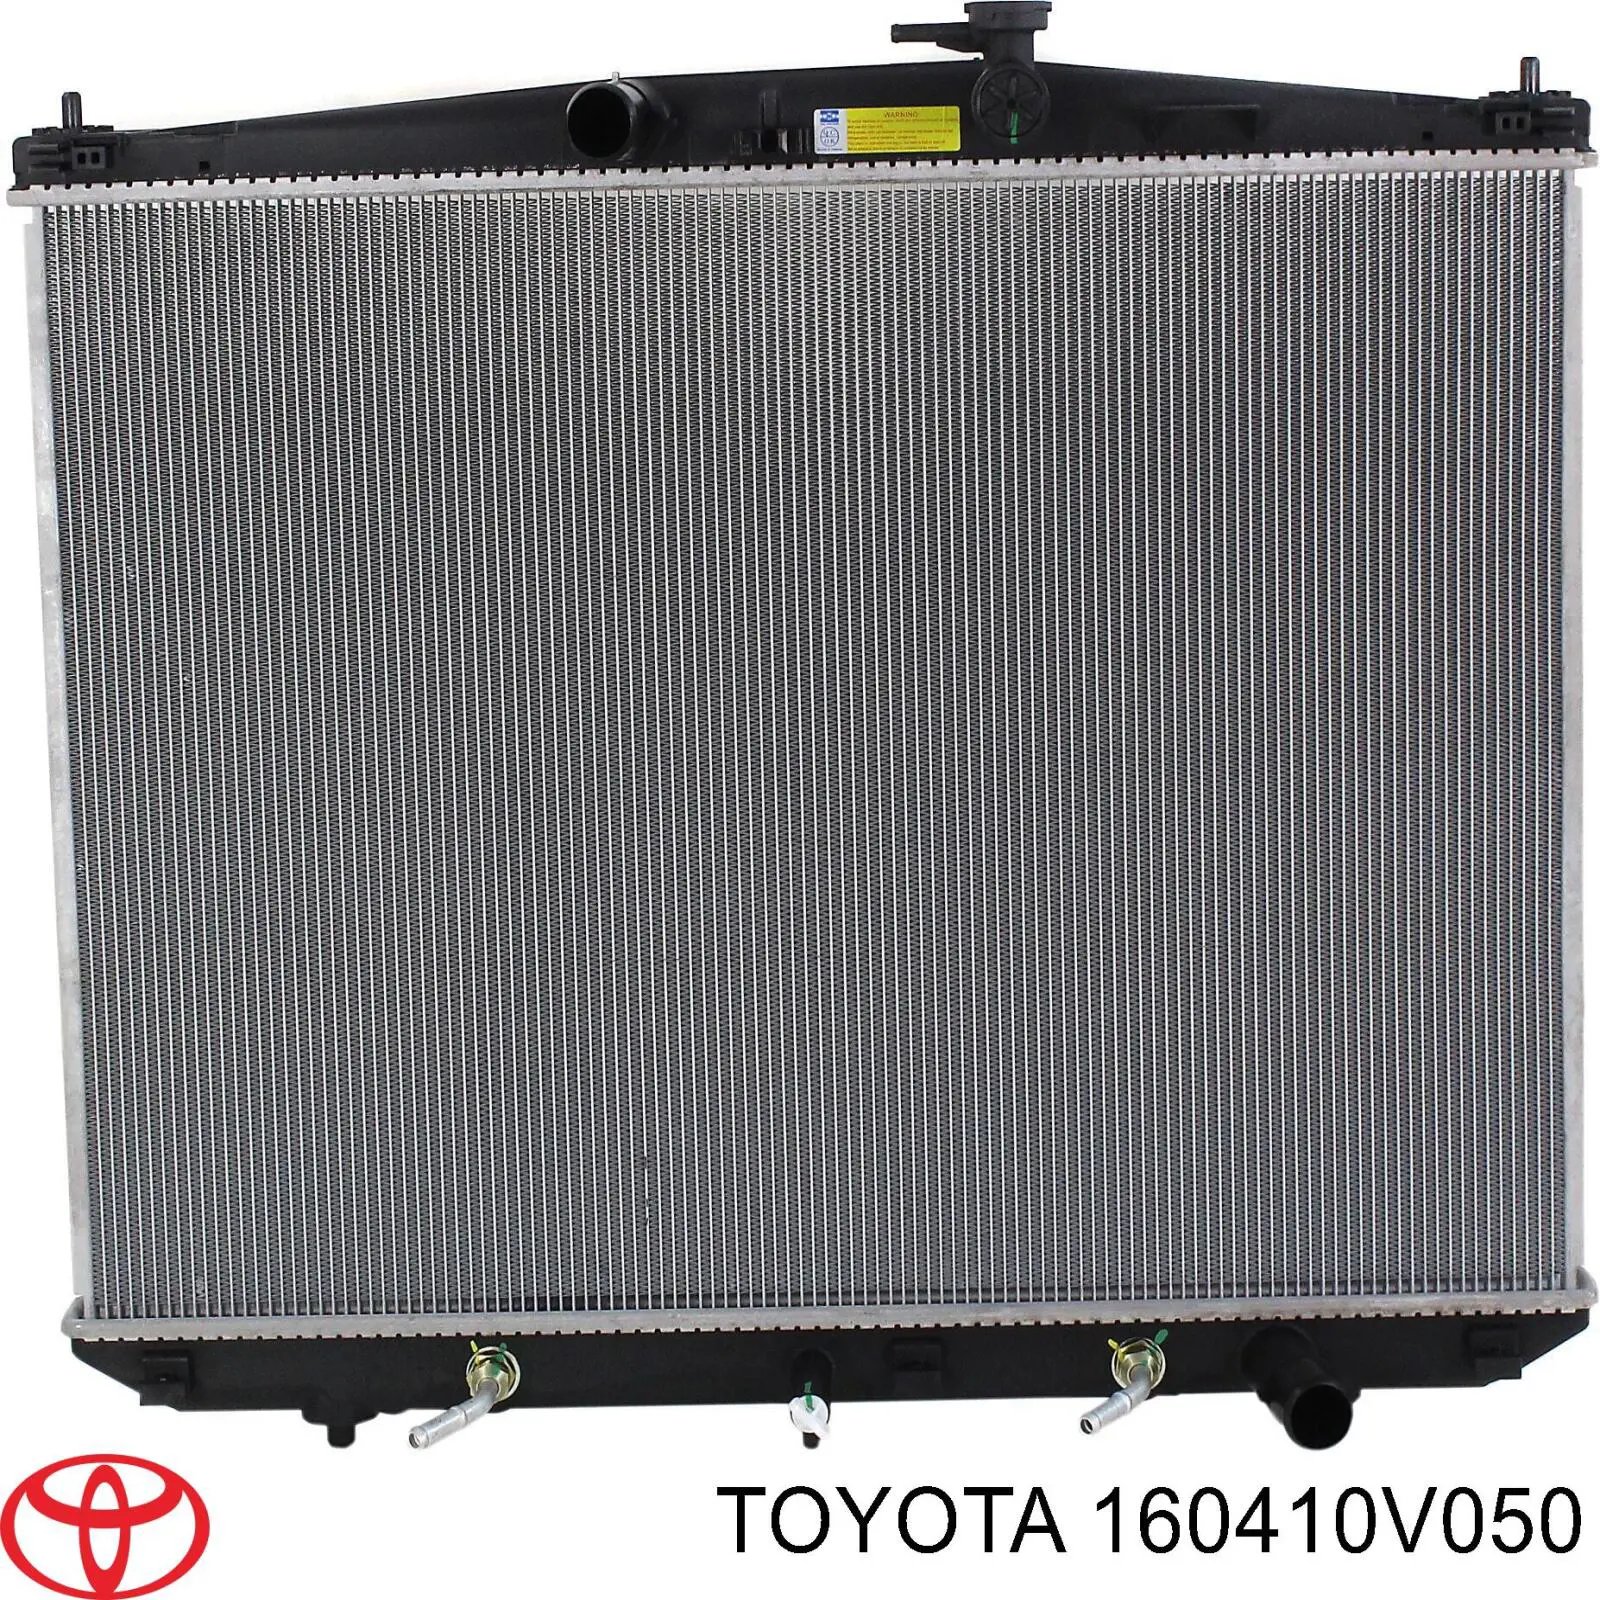 1604136050 Toyota радиатор